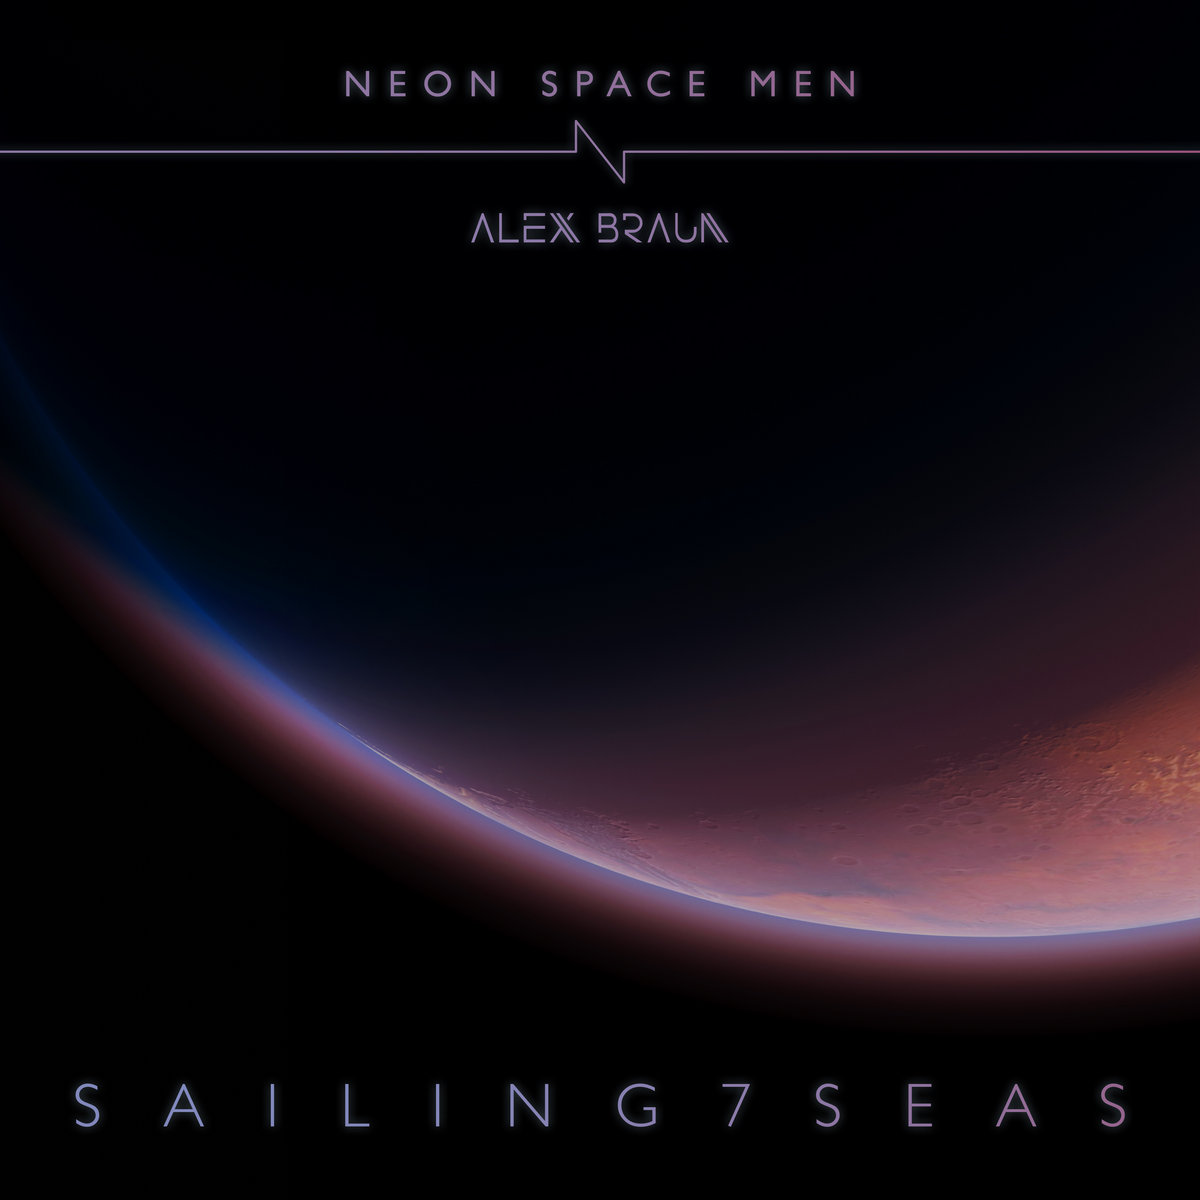 Neon Space Men - Sailing 7 Seas (feat. Alex Braun) - Neon Space Men - Sailing 7 Seas (feat. Alex Braun)